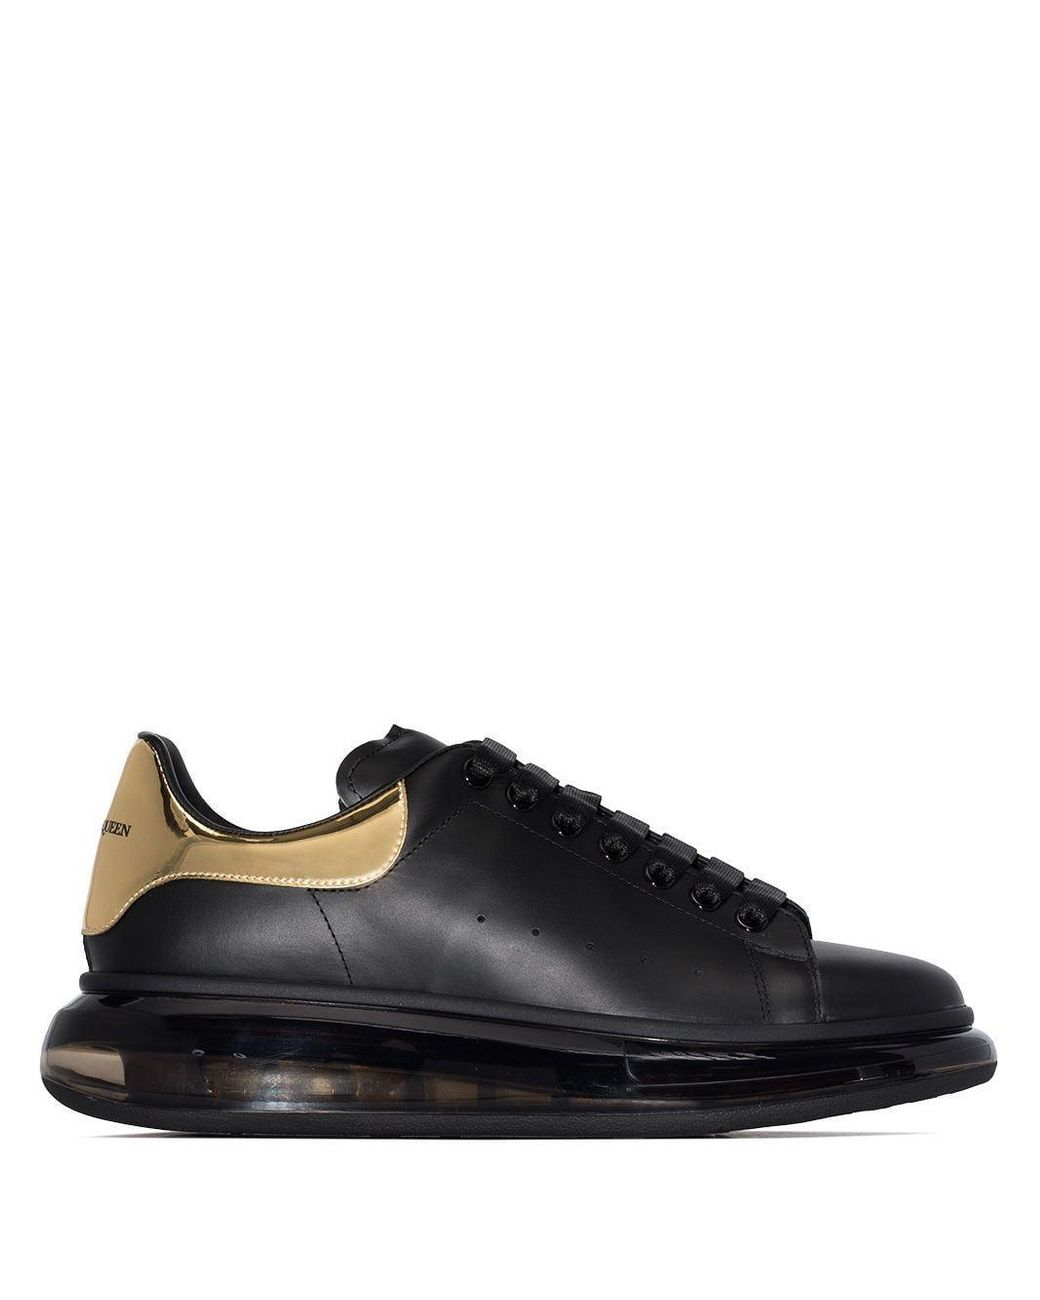 Alexander McQueen Oversized Leather Sneakers Black/gold for Men - Lyst